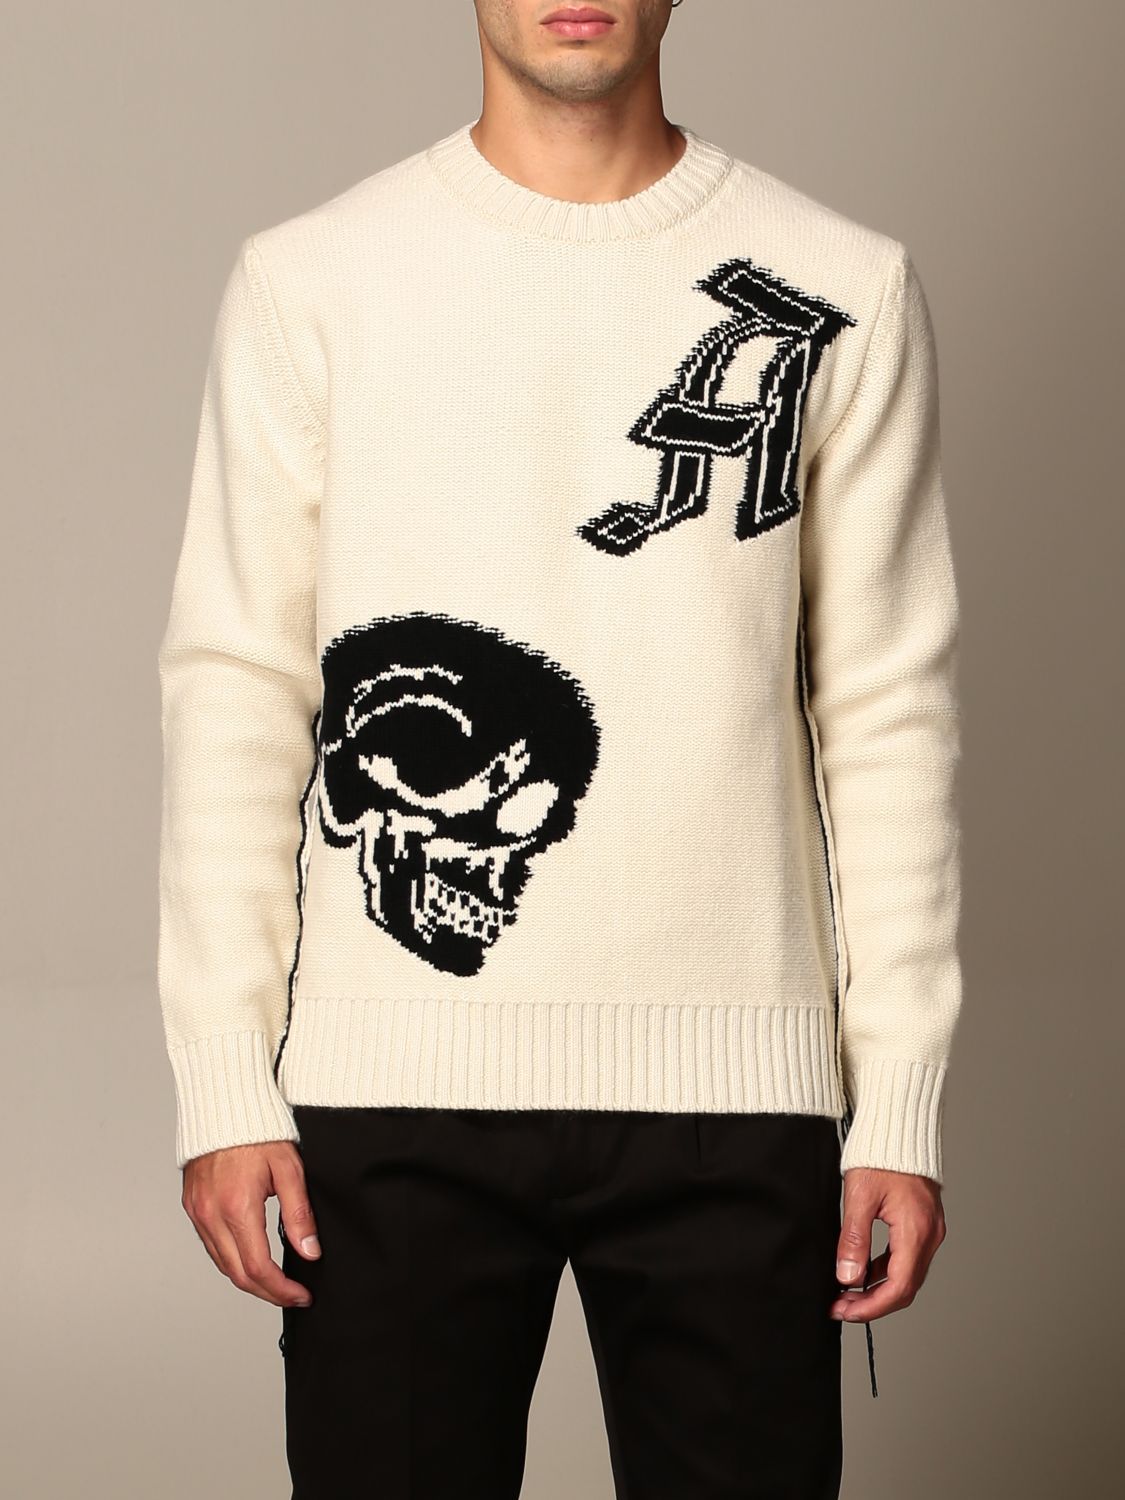 ALEXANDER MCQUEEN: shirt with skull - Ivory | Alexander Mcqueen sweater ...